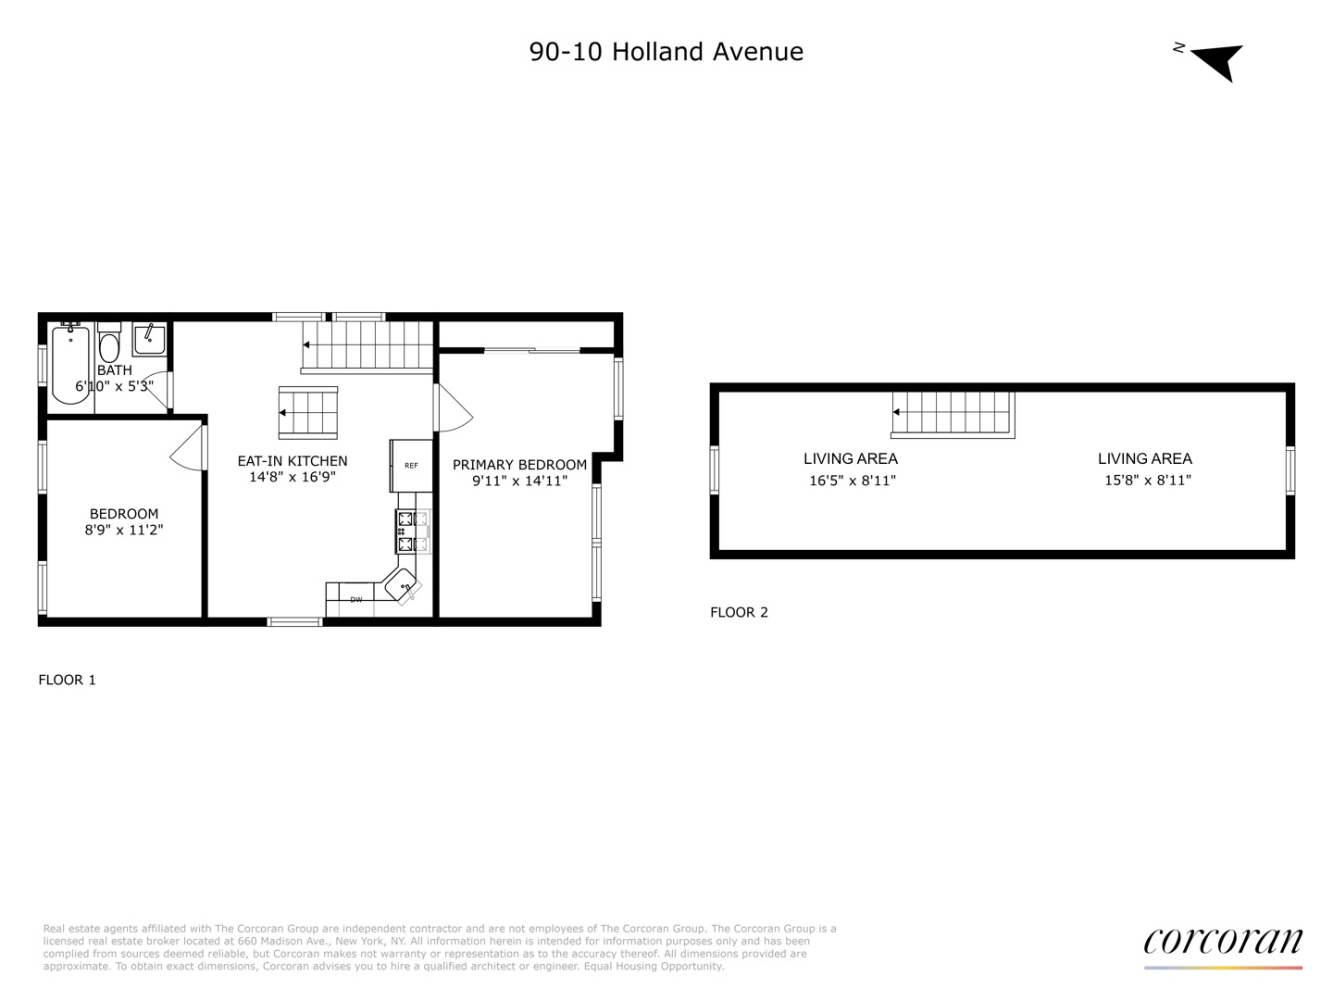 Floorplan for 90-10 Holland Avenue